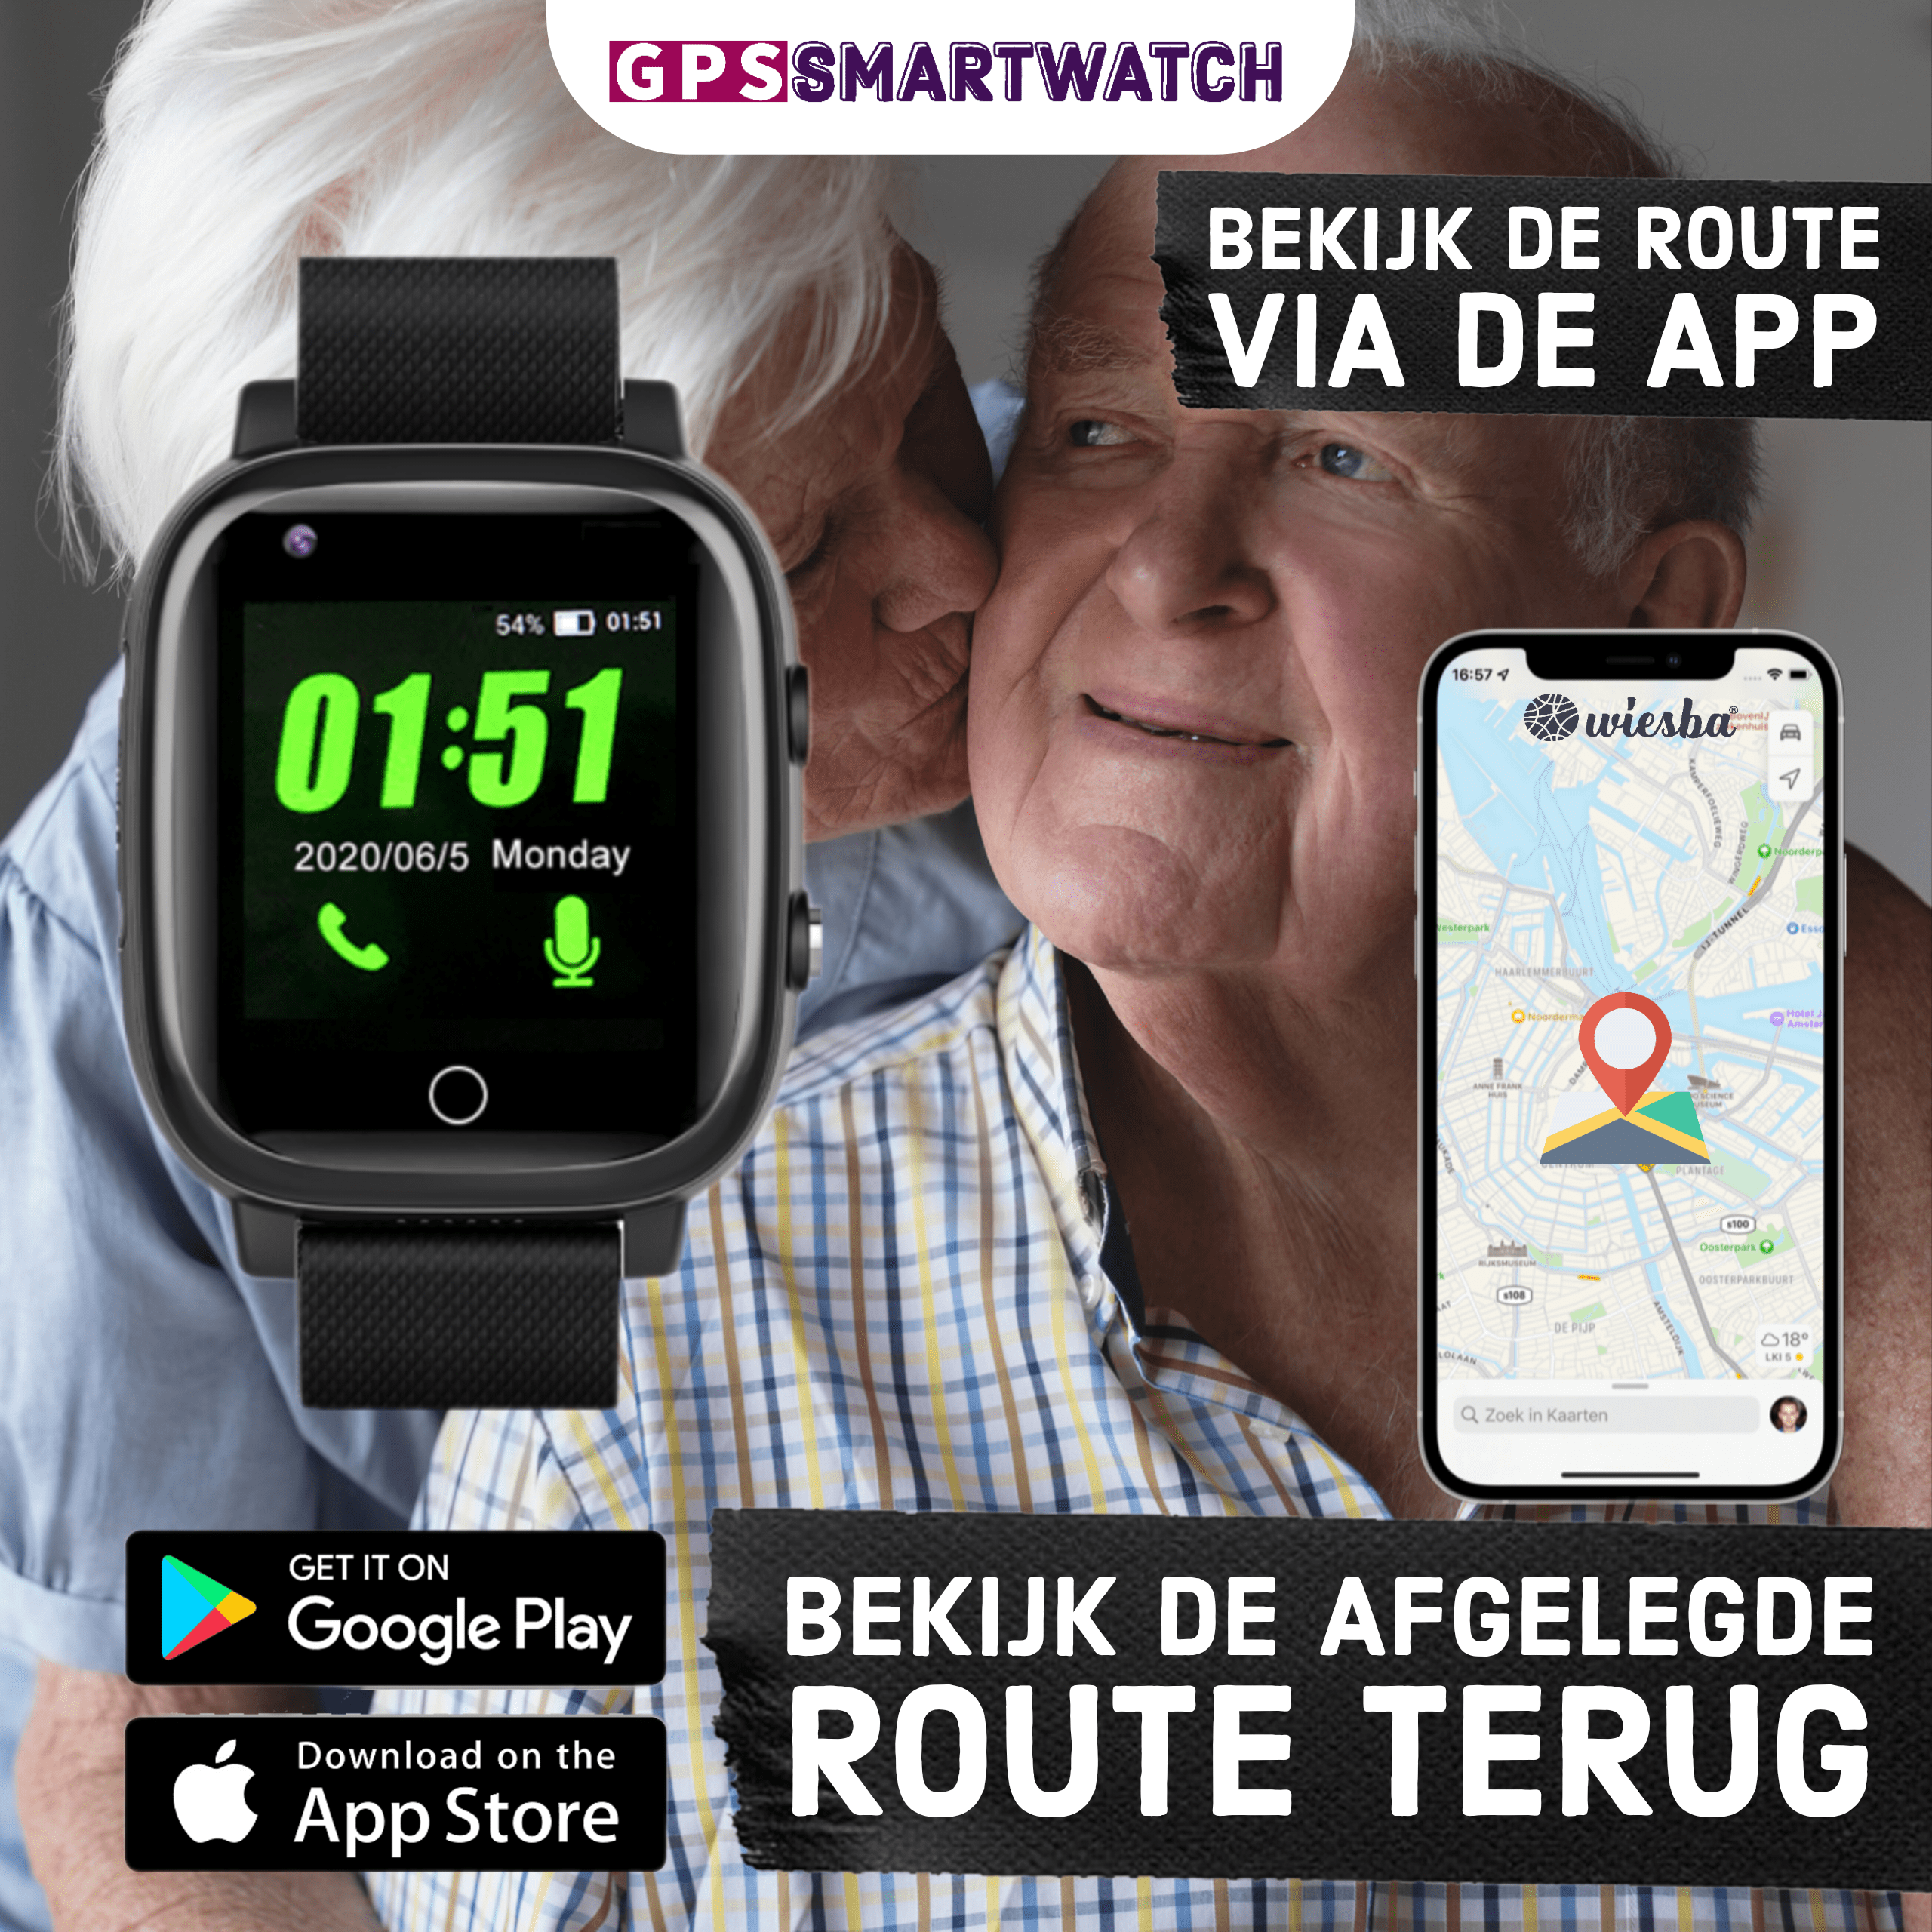 GPS Smartwatch WB5S - GPS Watch Senior - Smartwatch for the Elderly - Alarm Watch Elderly - GPS Watch Alzheimer - Fall Detection